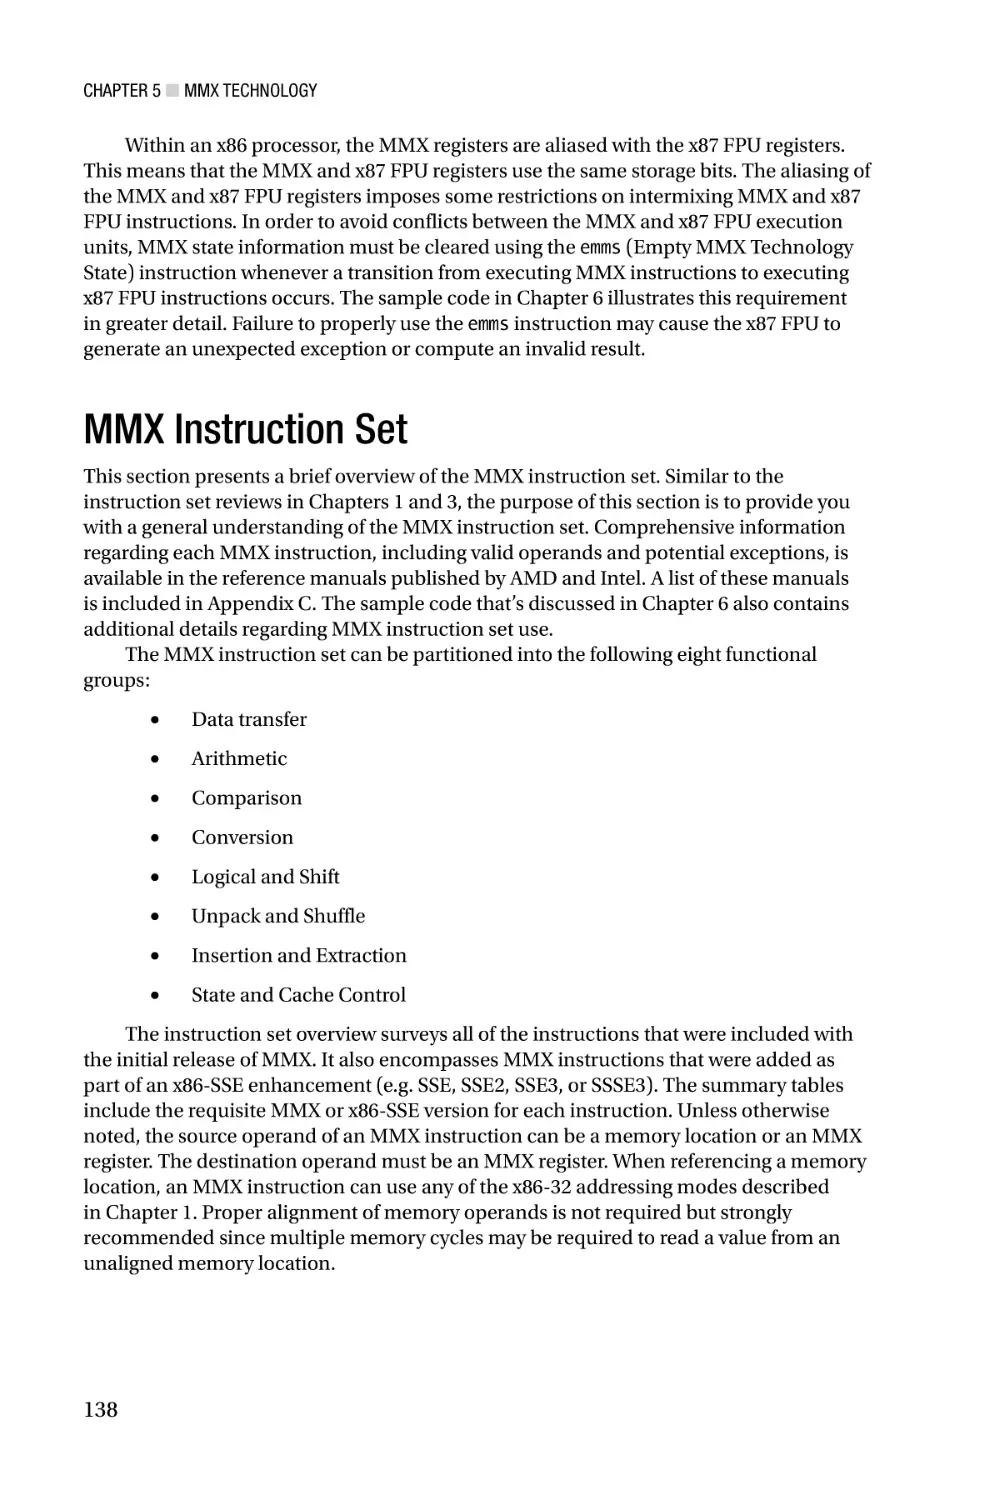 MMX Instruction Set